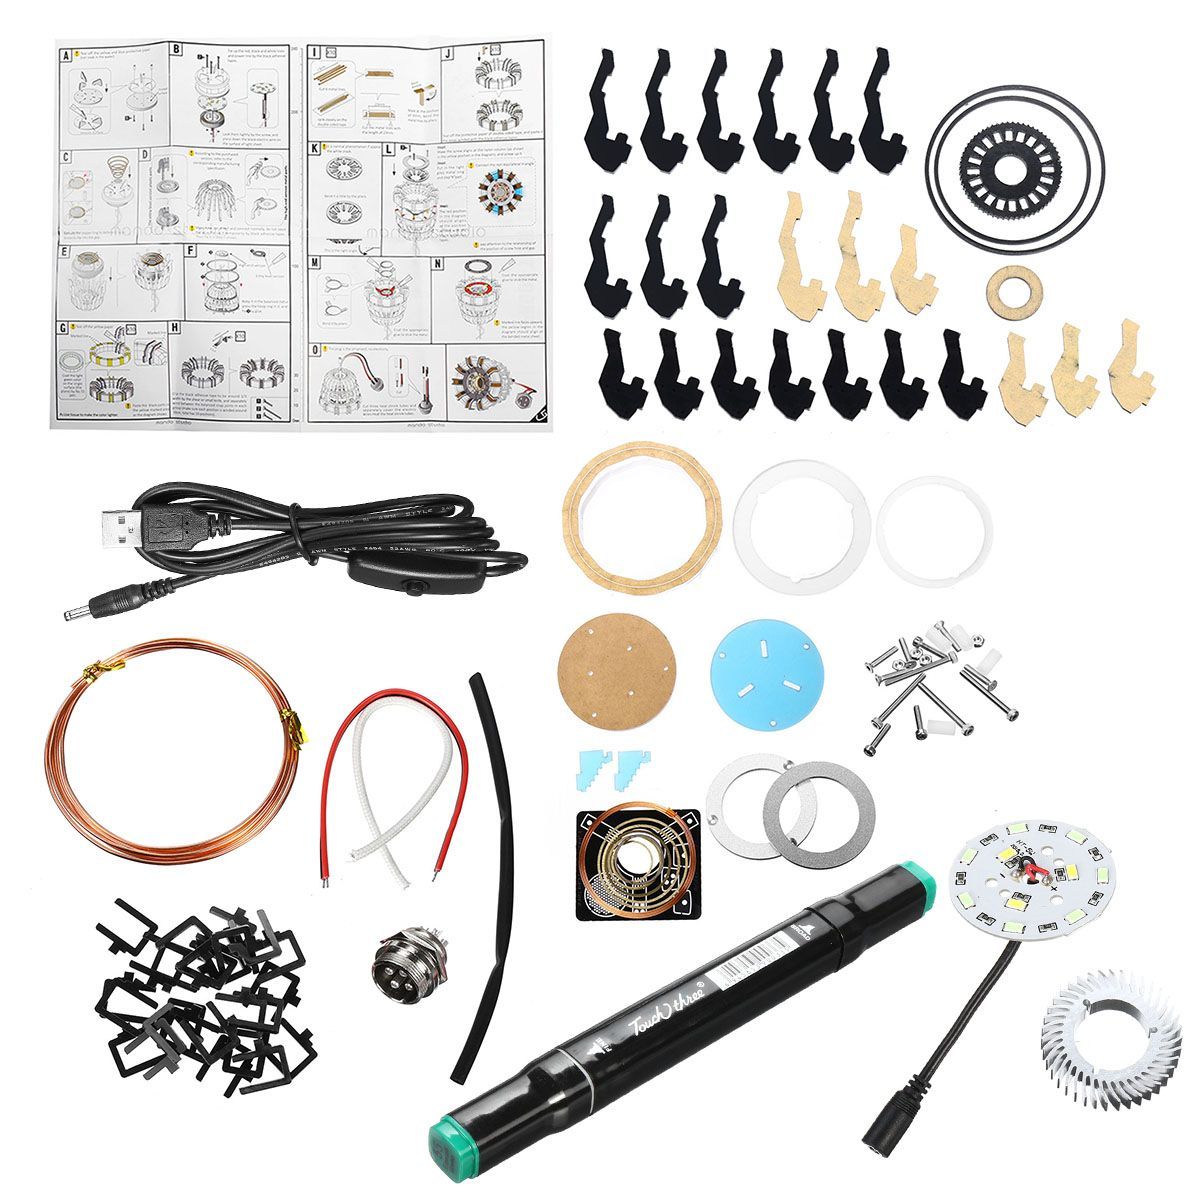 MK2-Acrylic-Remote-Ver-Tony-ARC-Reactor-Model-DIY-Kit-USB-Chest-Lamp-Remote-Control-Illuminant-LED-F-1477131